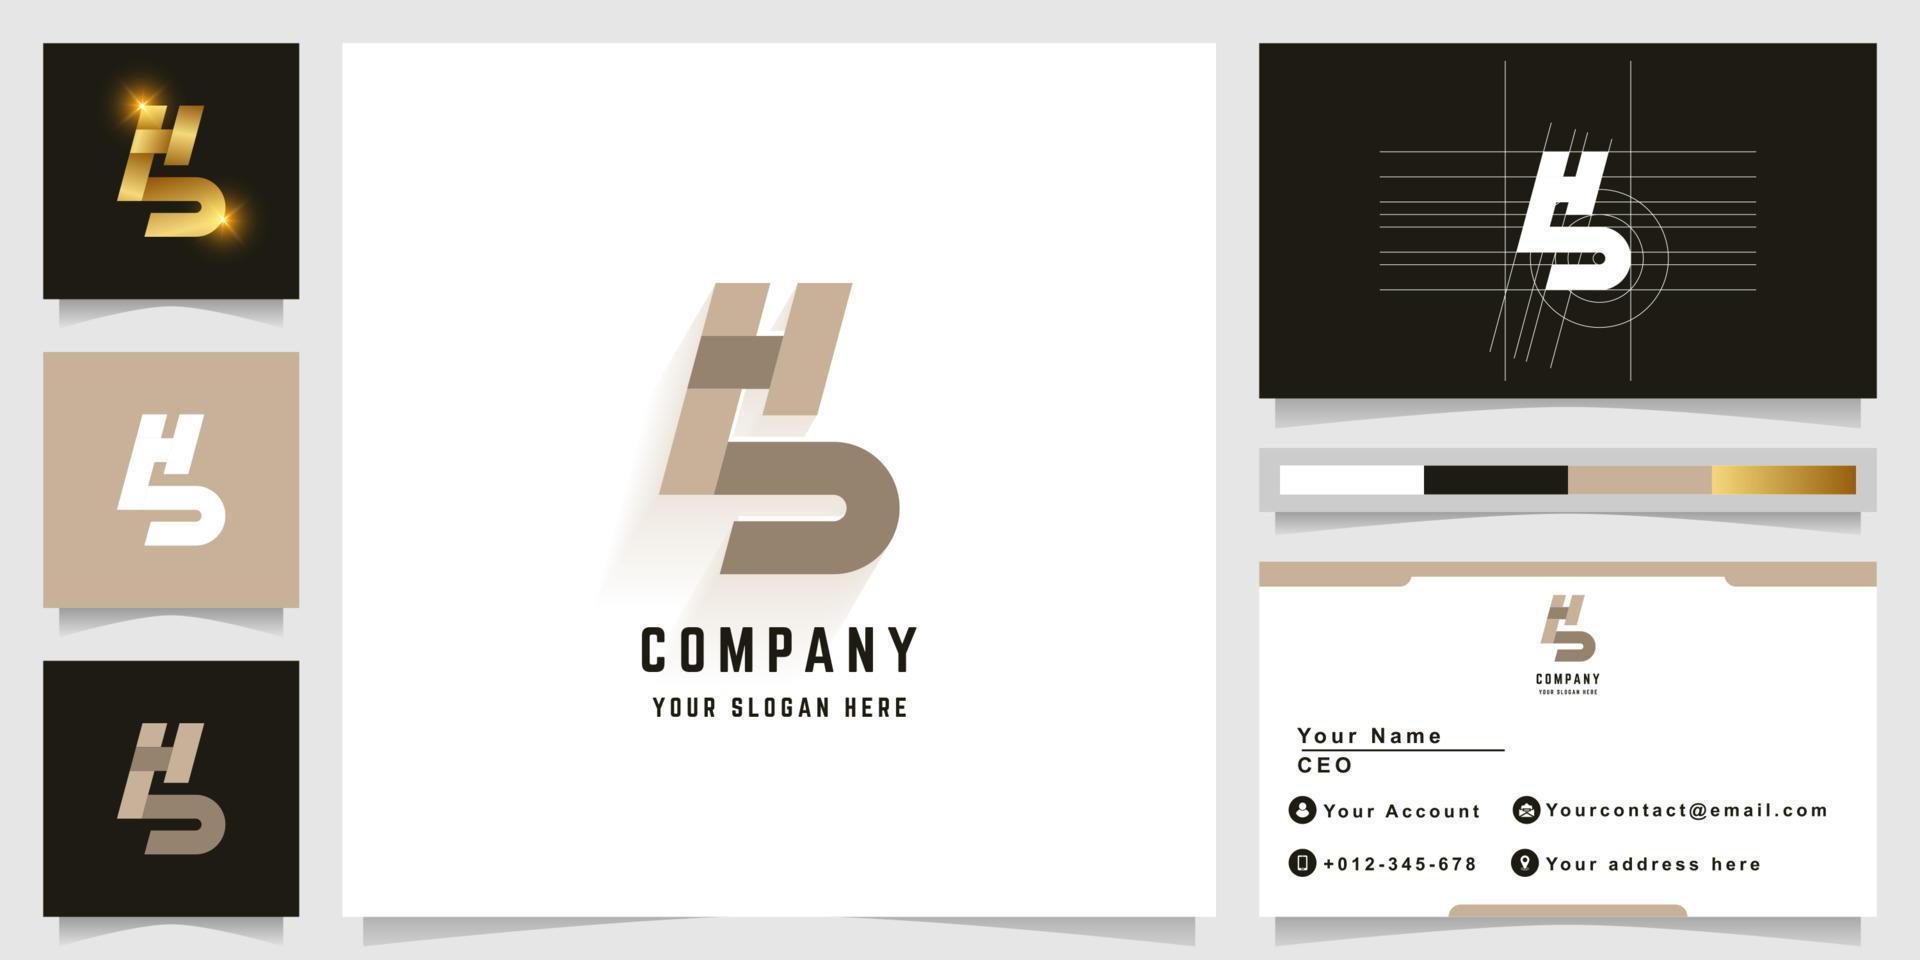 Letter Hs or Hb monogram logo with business card design vector